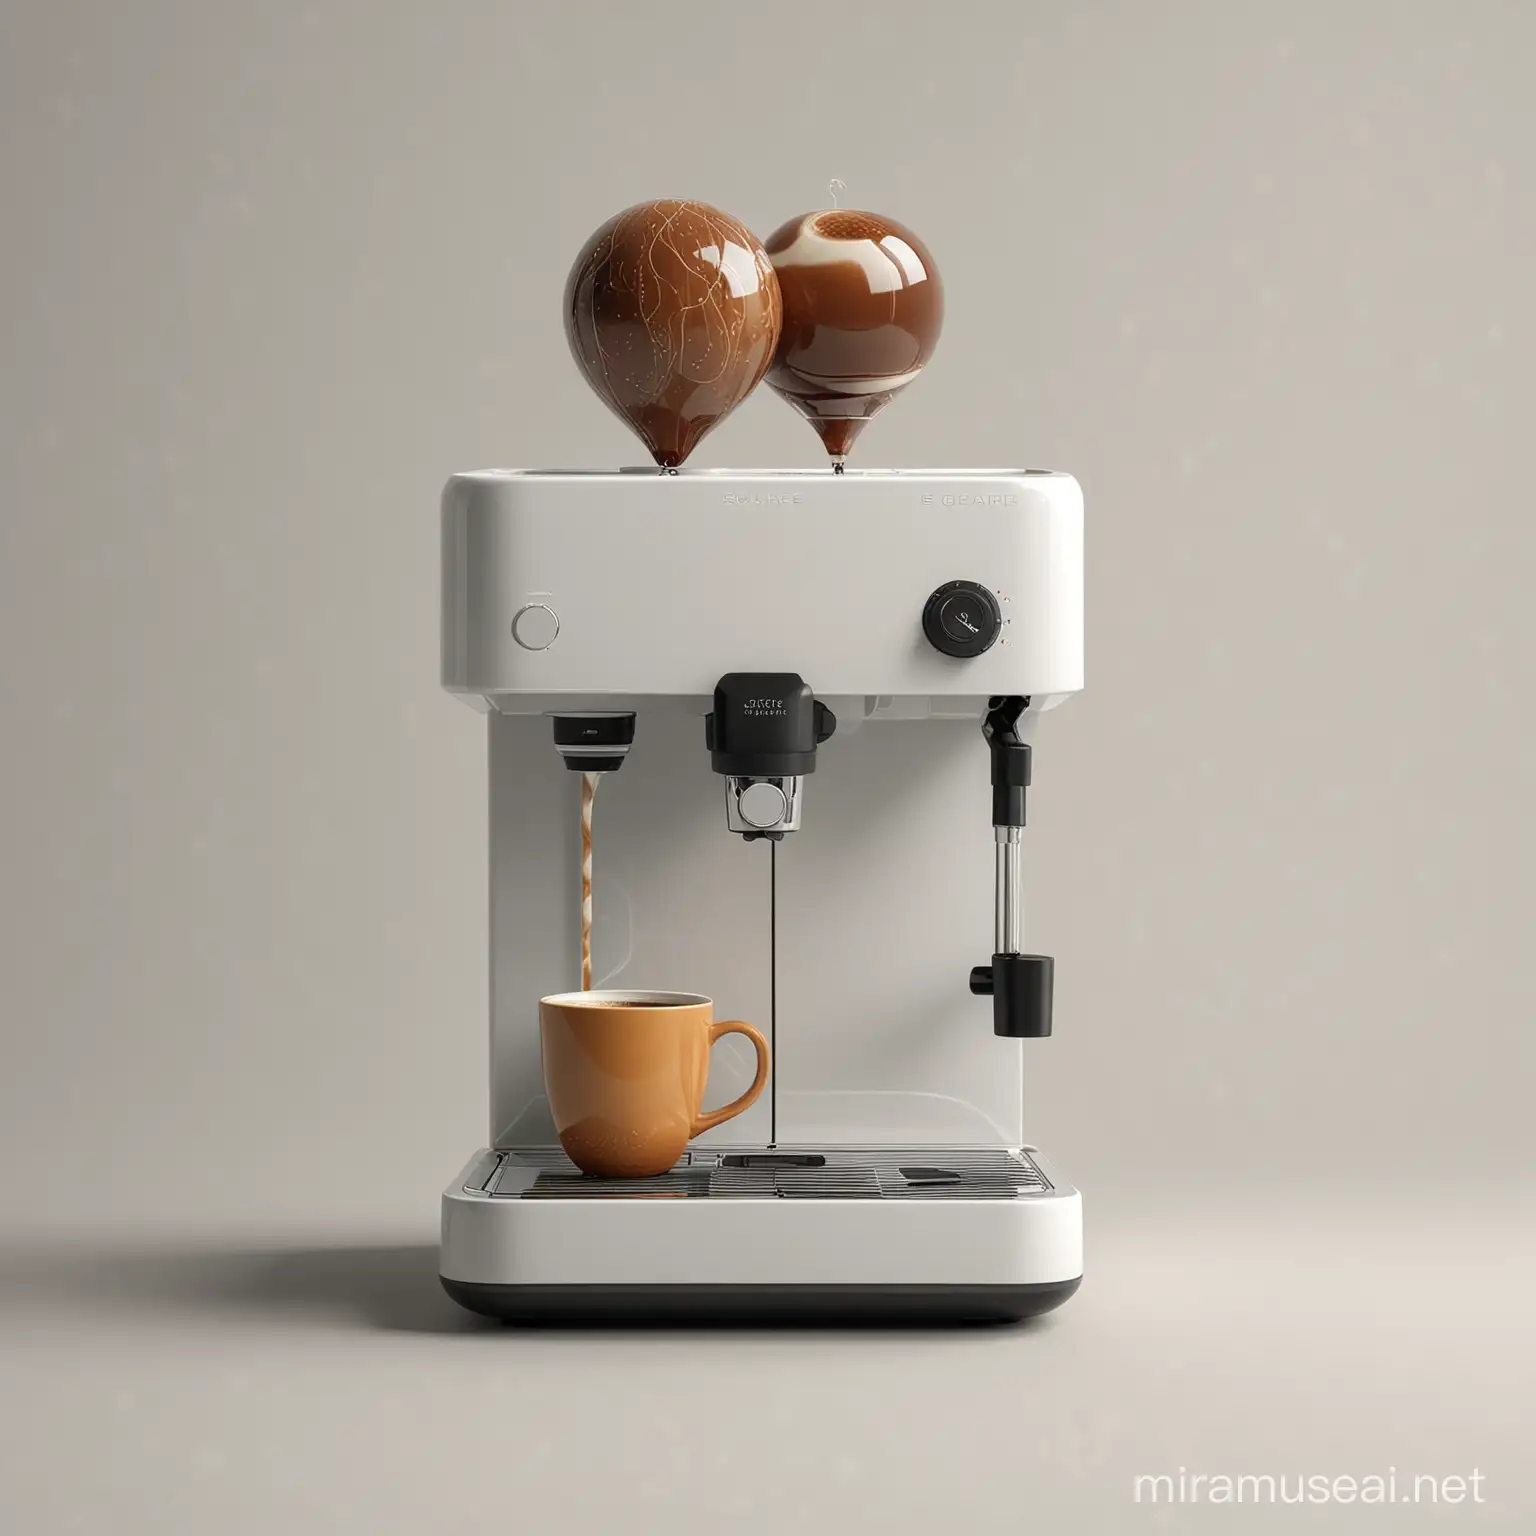 Innovative Square Coffee Machine Design for Modern Kitchens